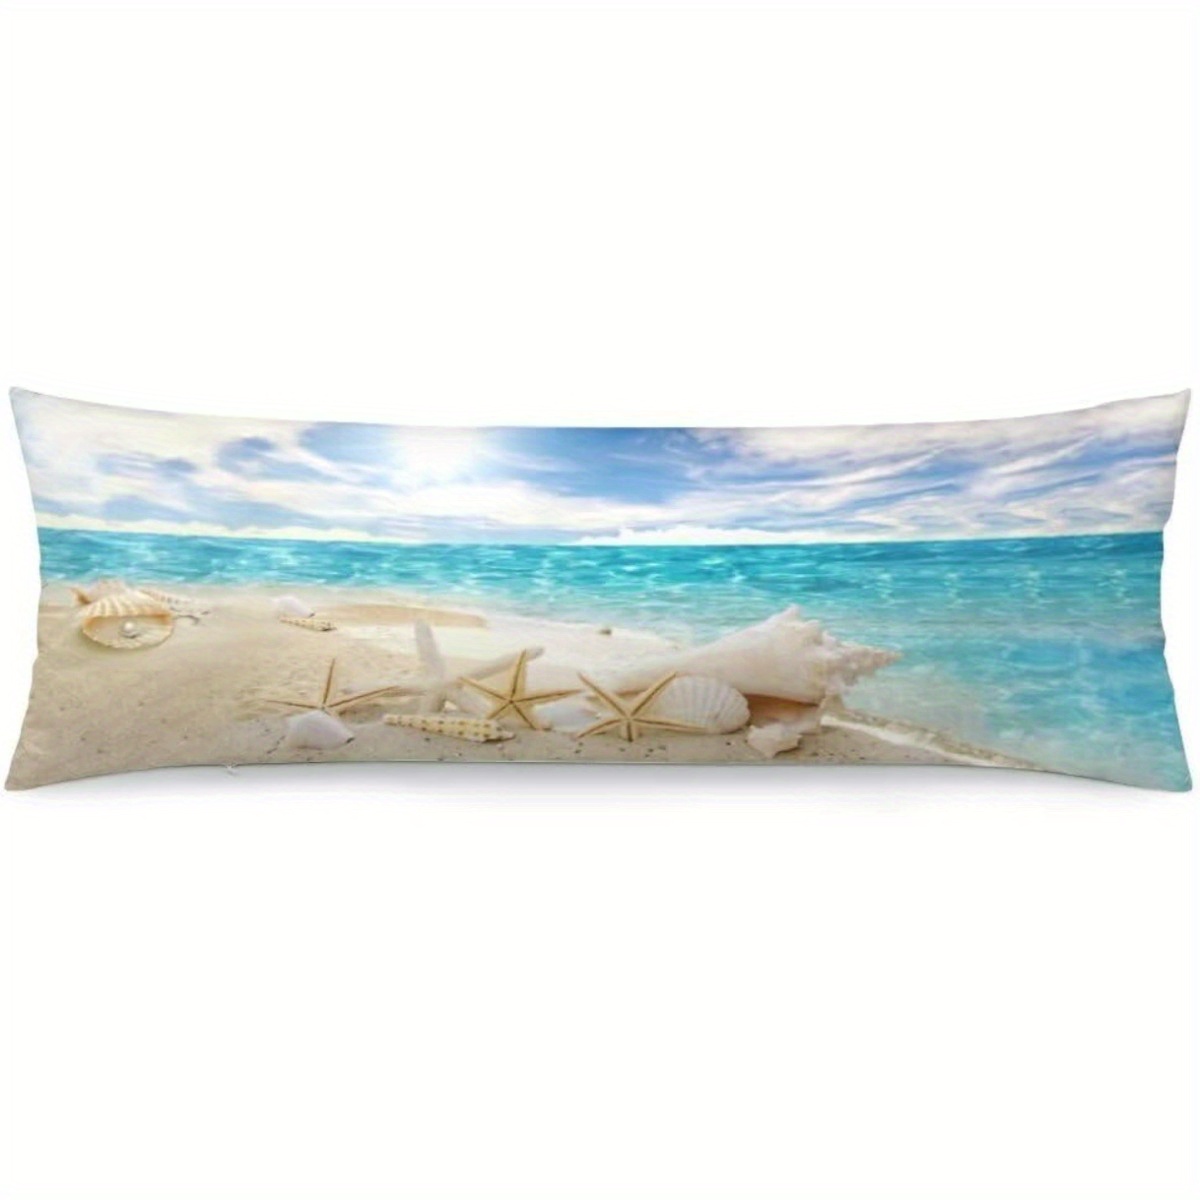 

1pc Beach Theme Body Pillow Cover 20"x54", Vintage Style Summer Starfish & Seashell Design, Coastal Nautical Decorative Bedding Pillowcase With Zipper, Soft Long Cushion Cover For Home Decor